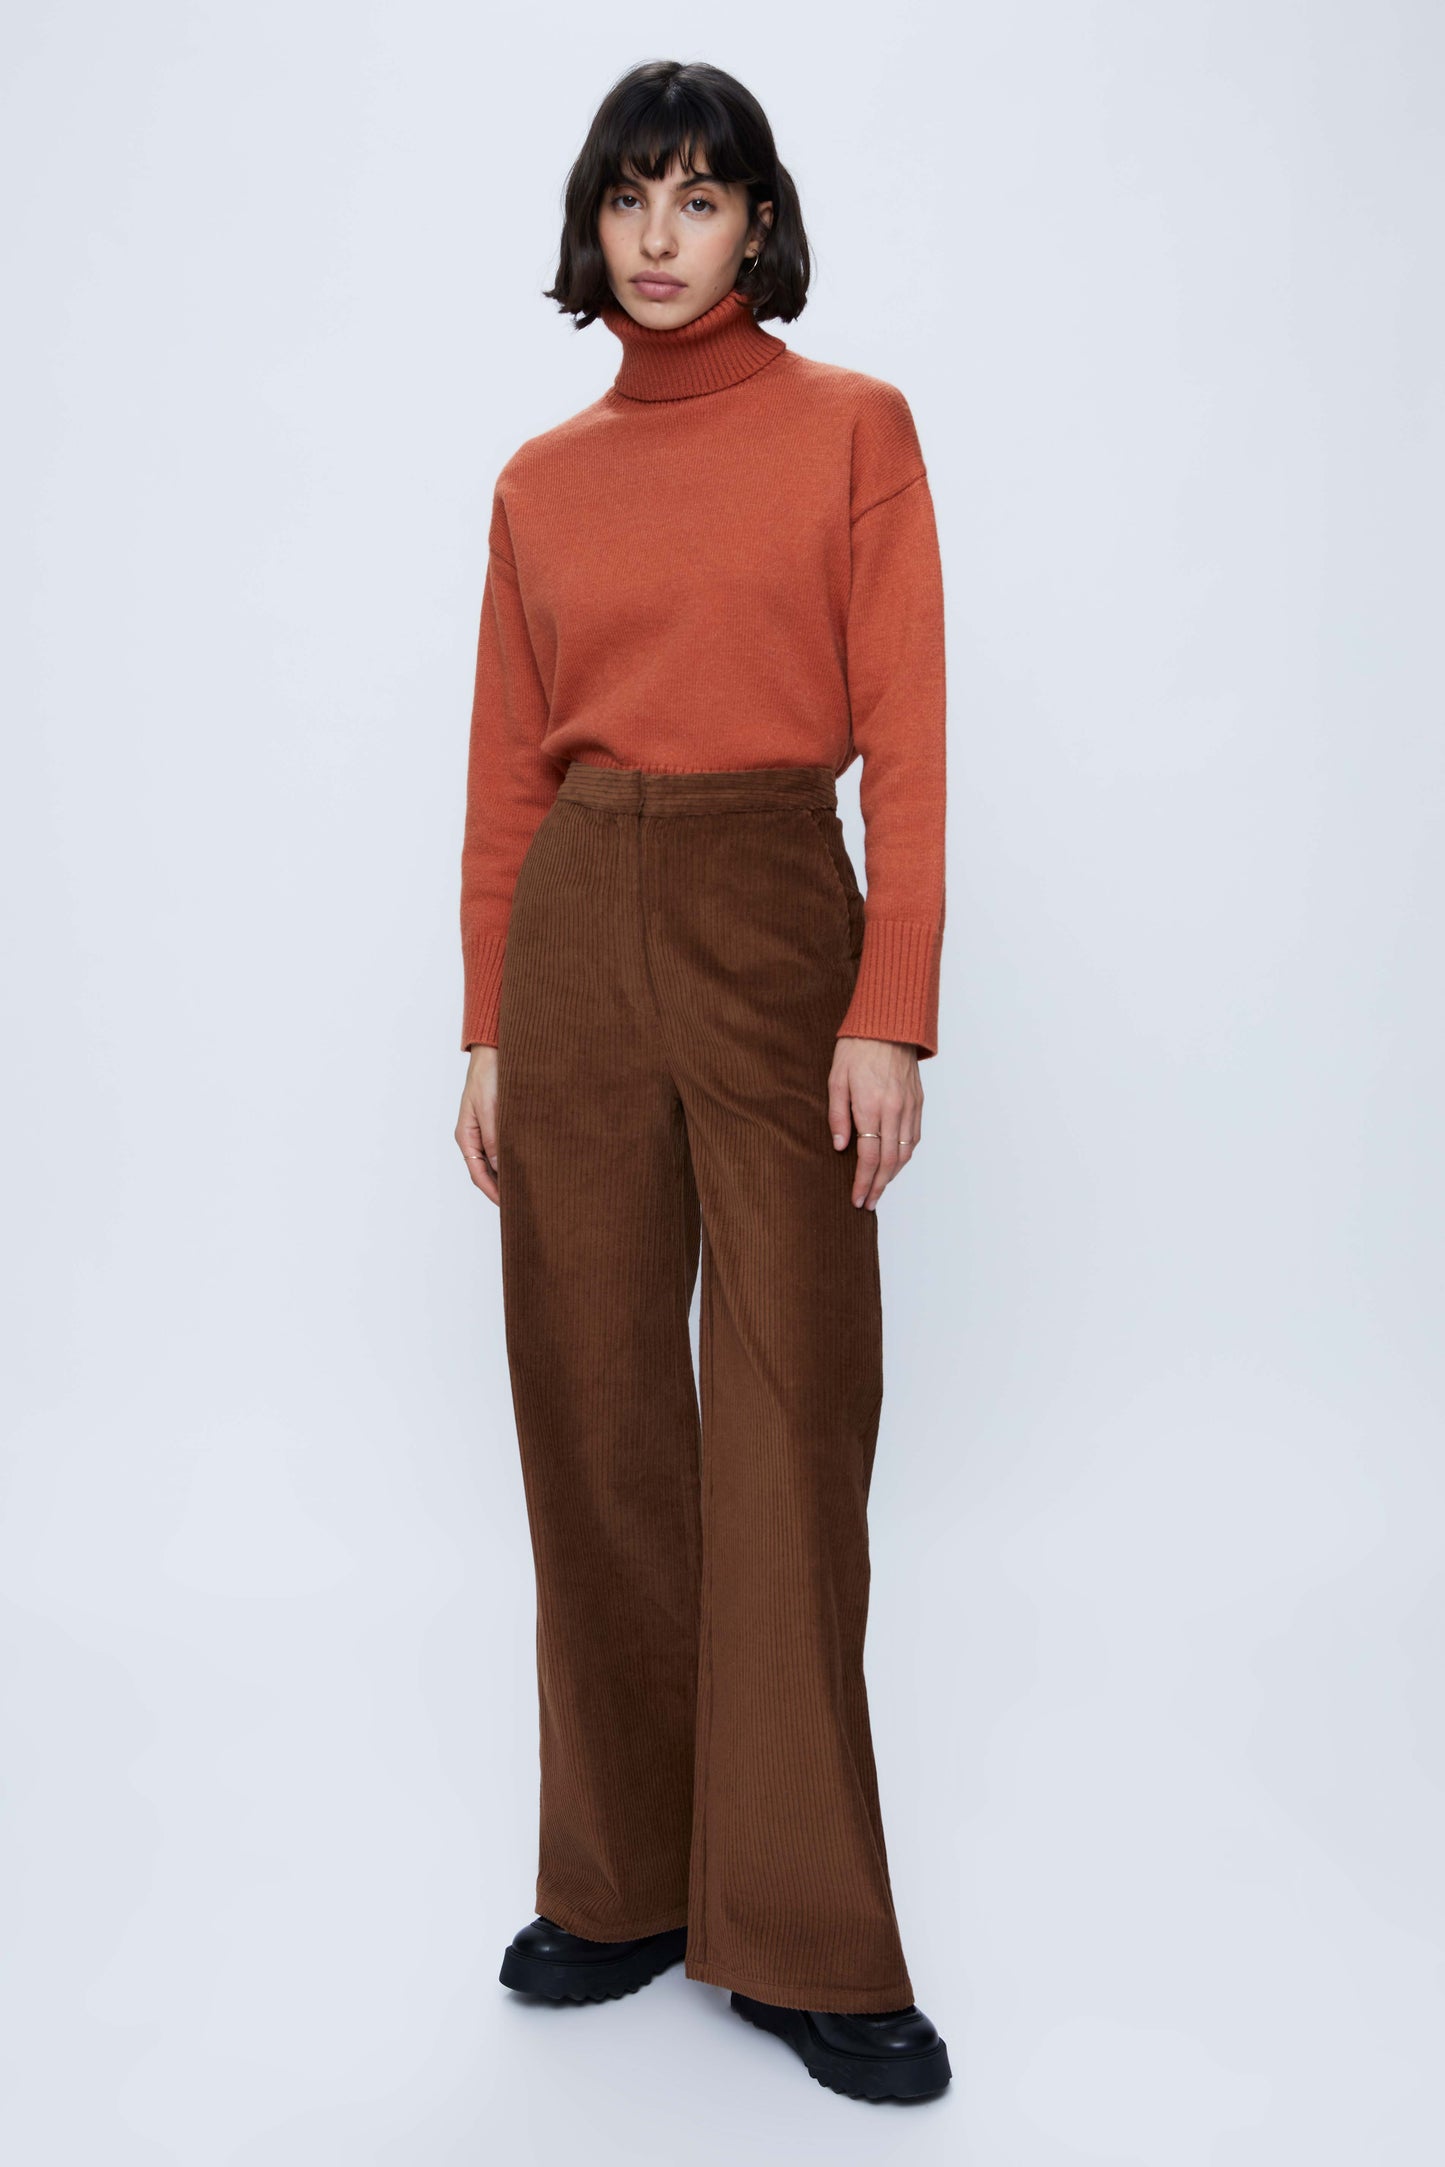 Long brown corduroy pants with high waist